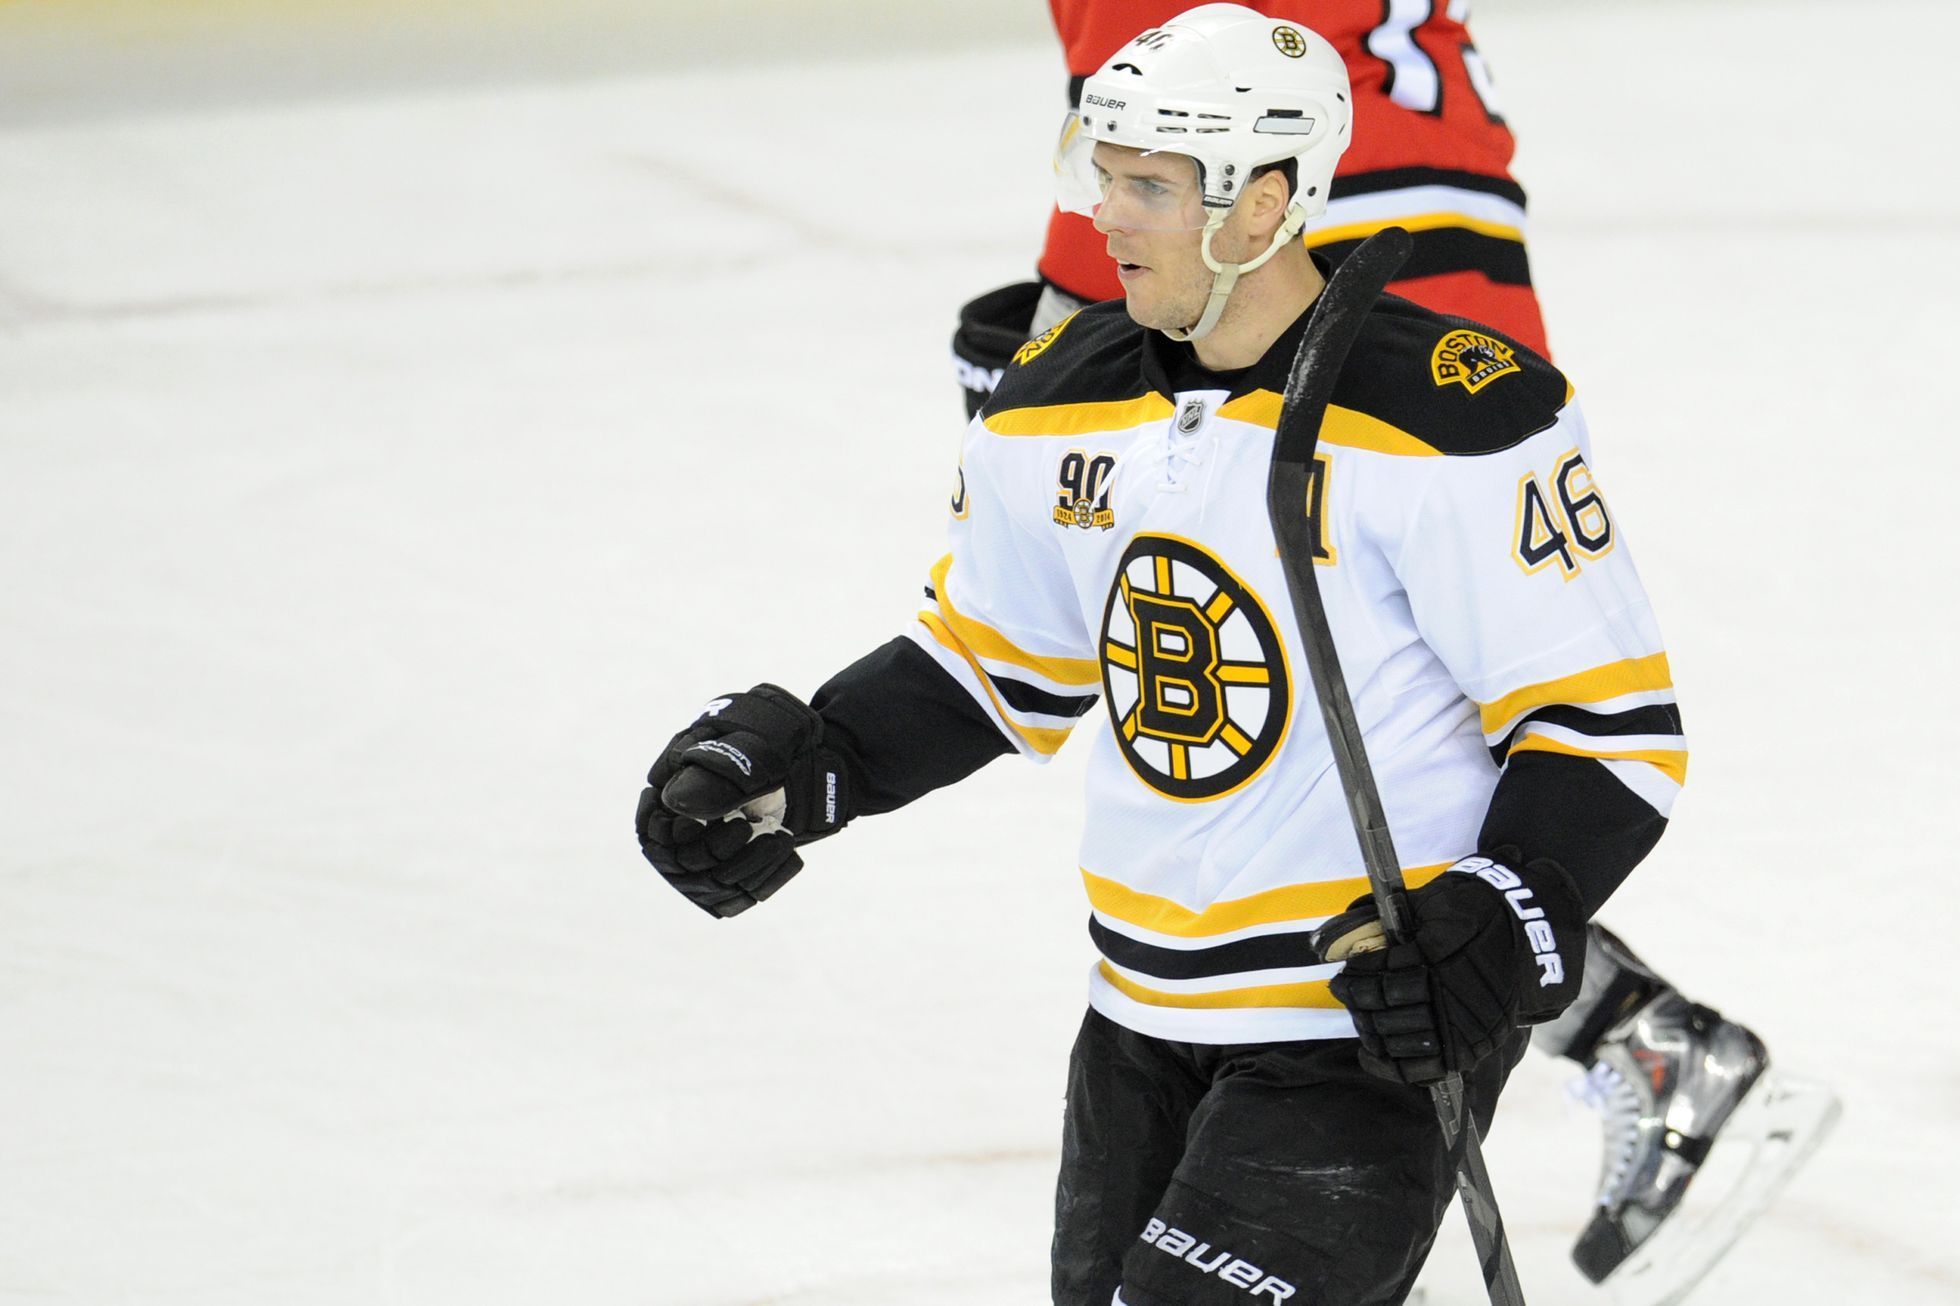 NHL: Boston Bruins proti Calgary Flames (David Krejčí)